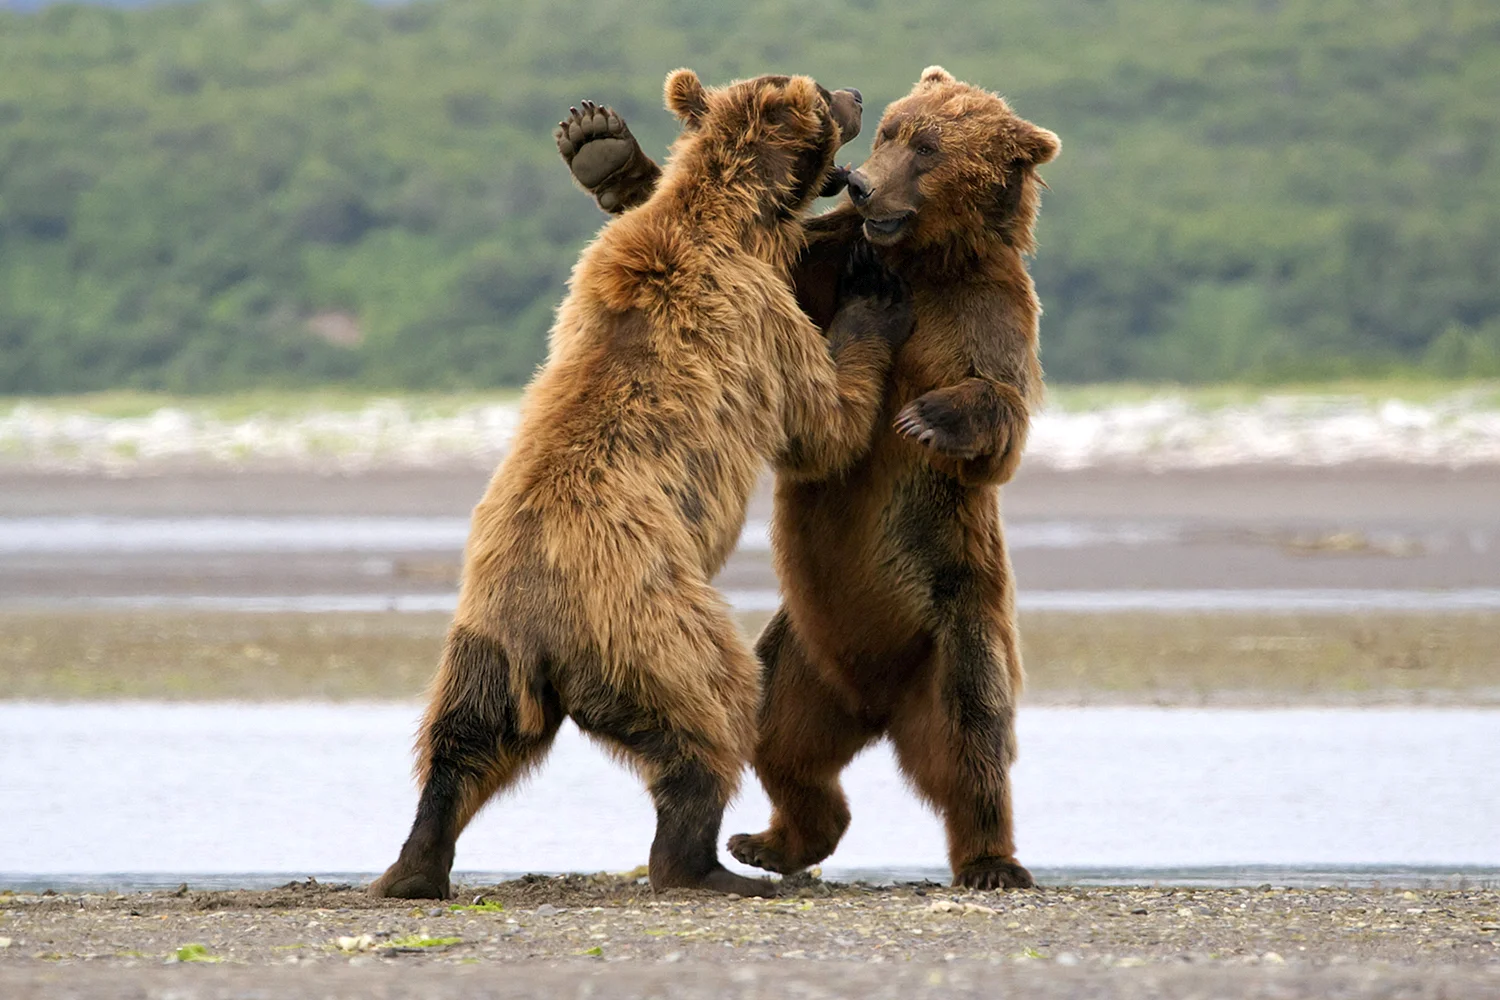 Танцующие медведи